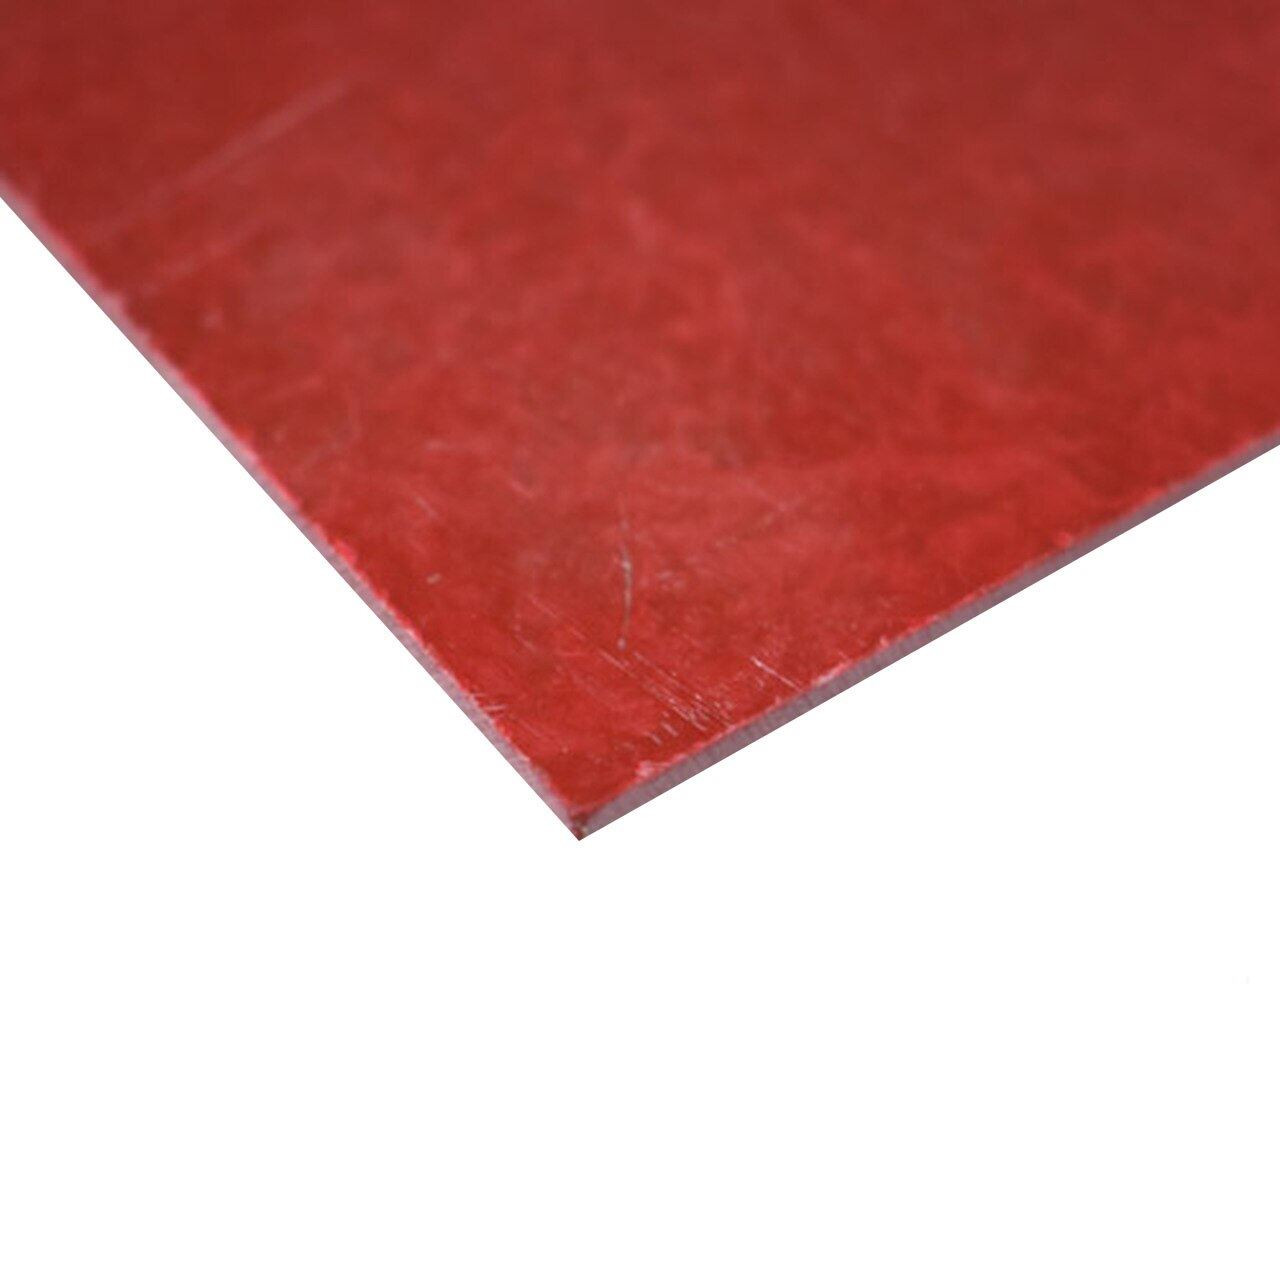 0.063" x 12" x 12", GPO-3 Glass Laminate Sheet, Red